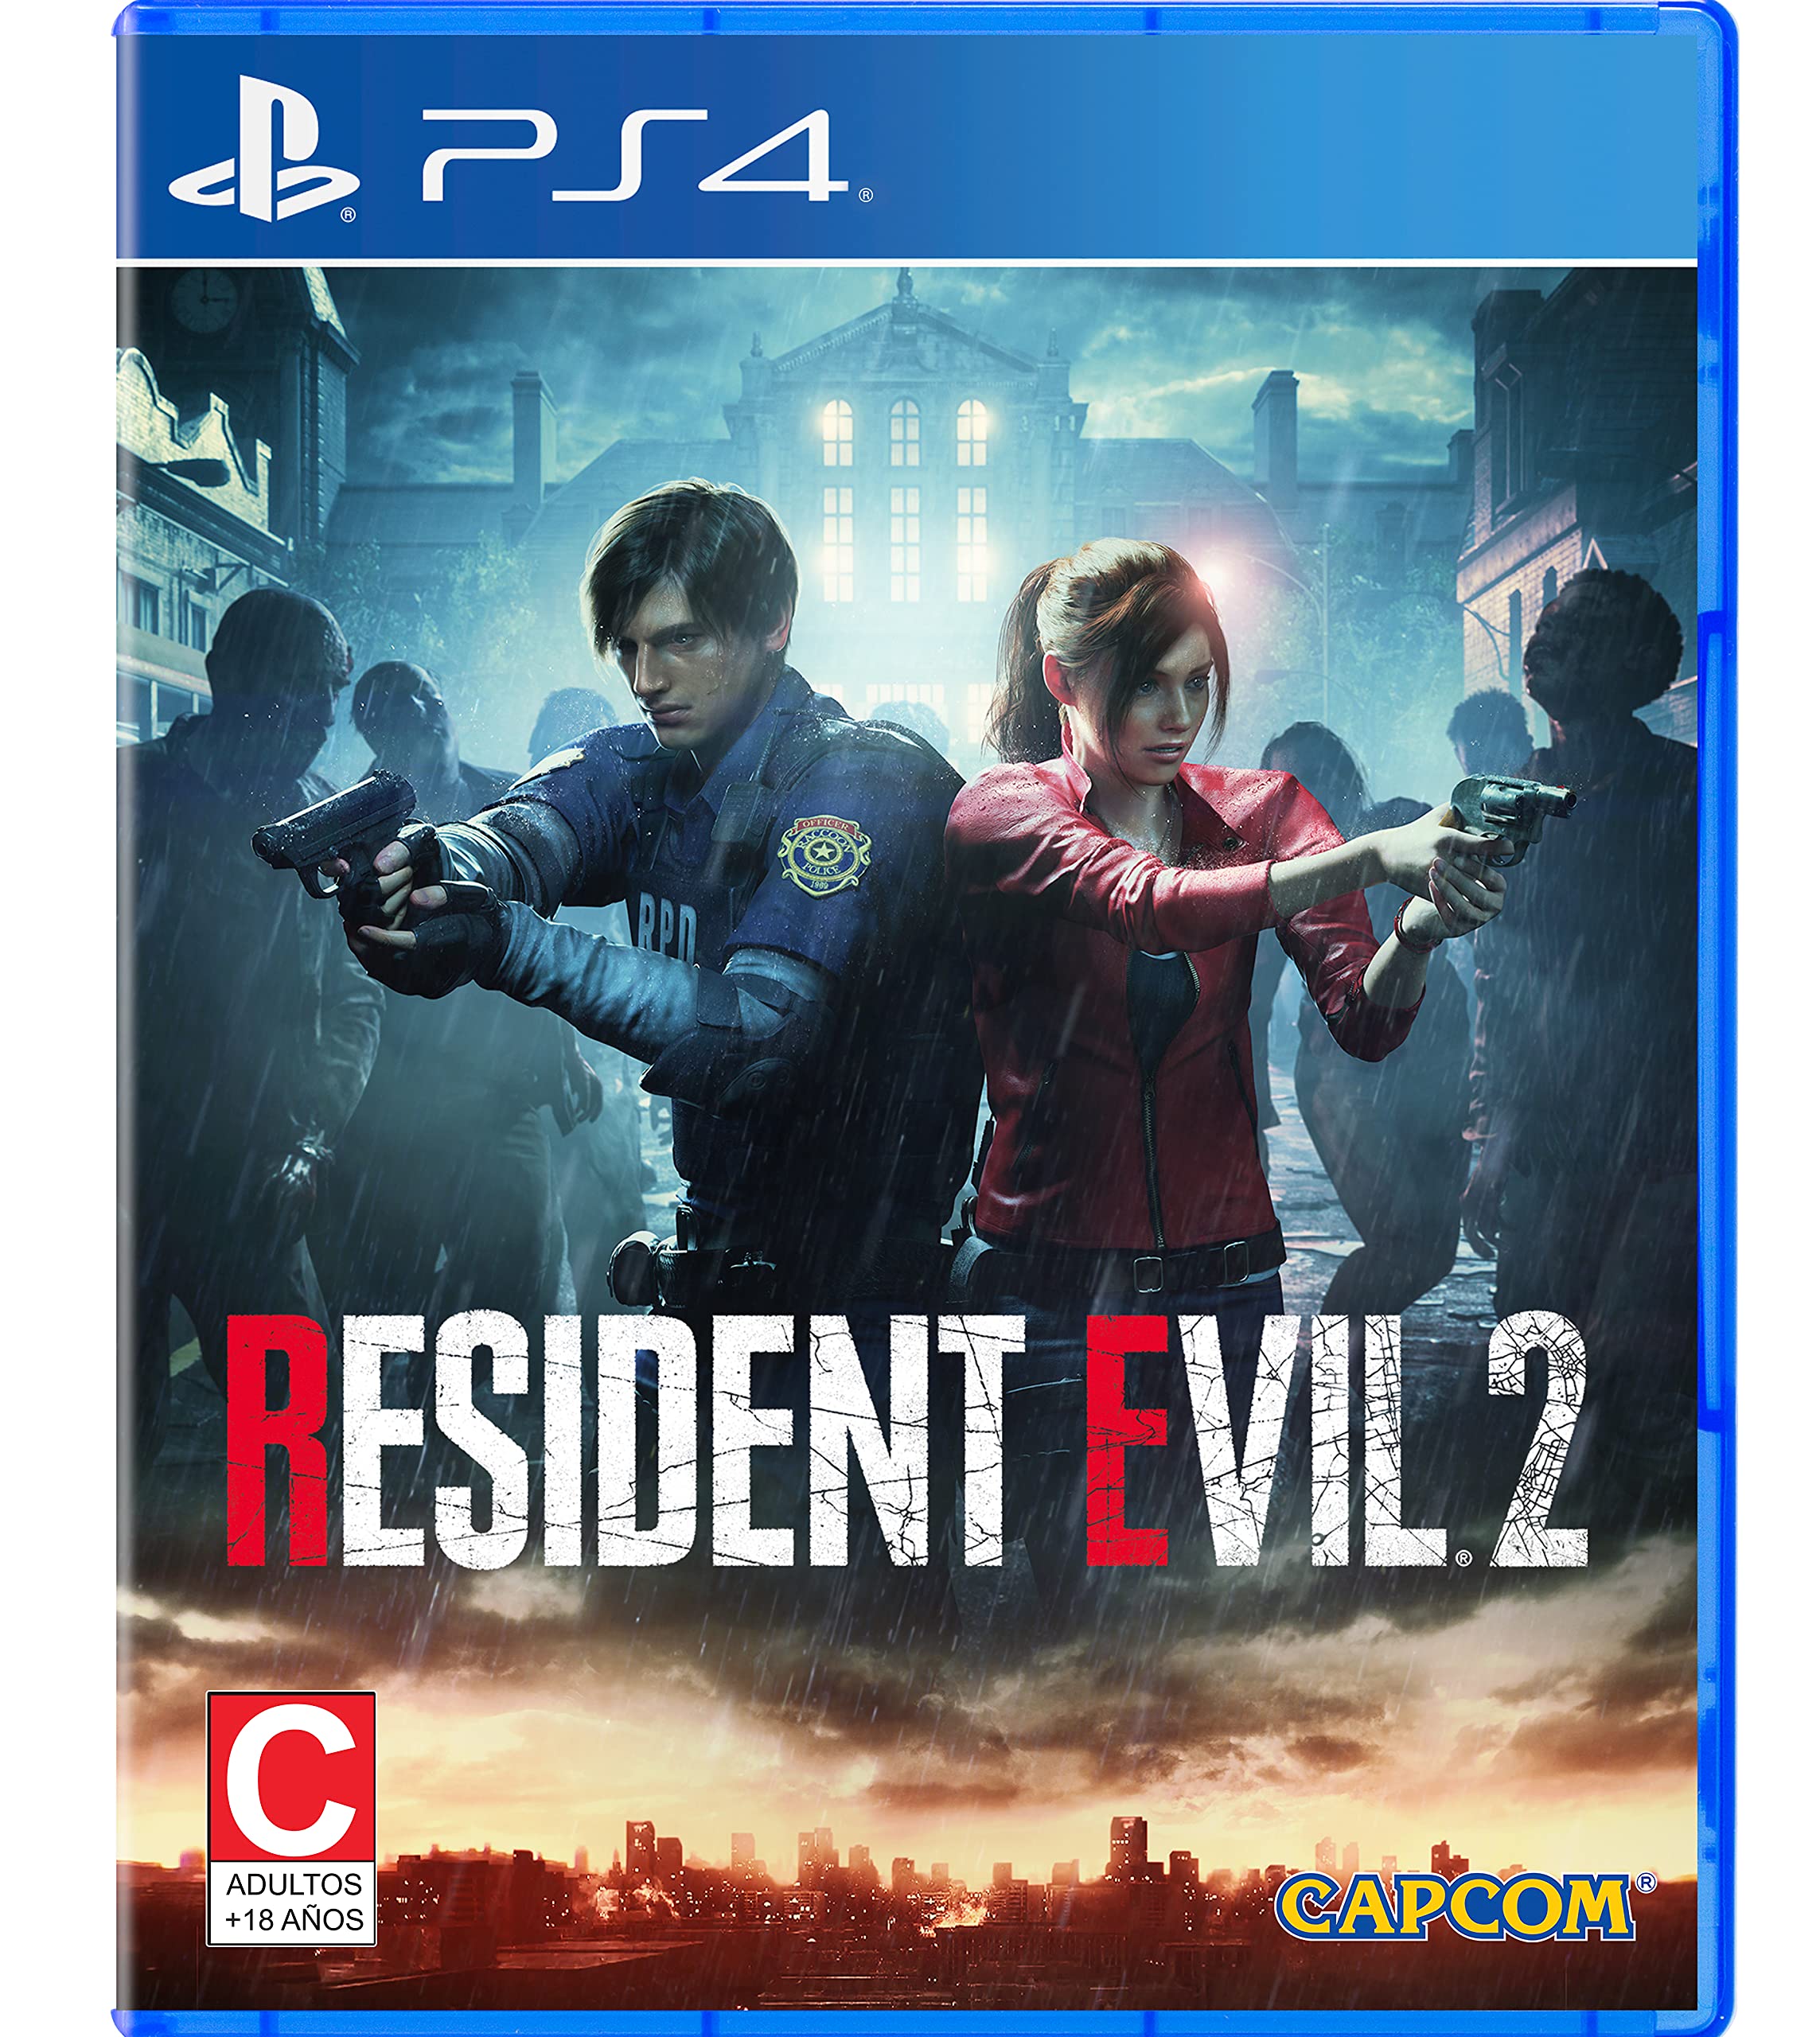 Resident Evil 2 - PlayStation 4